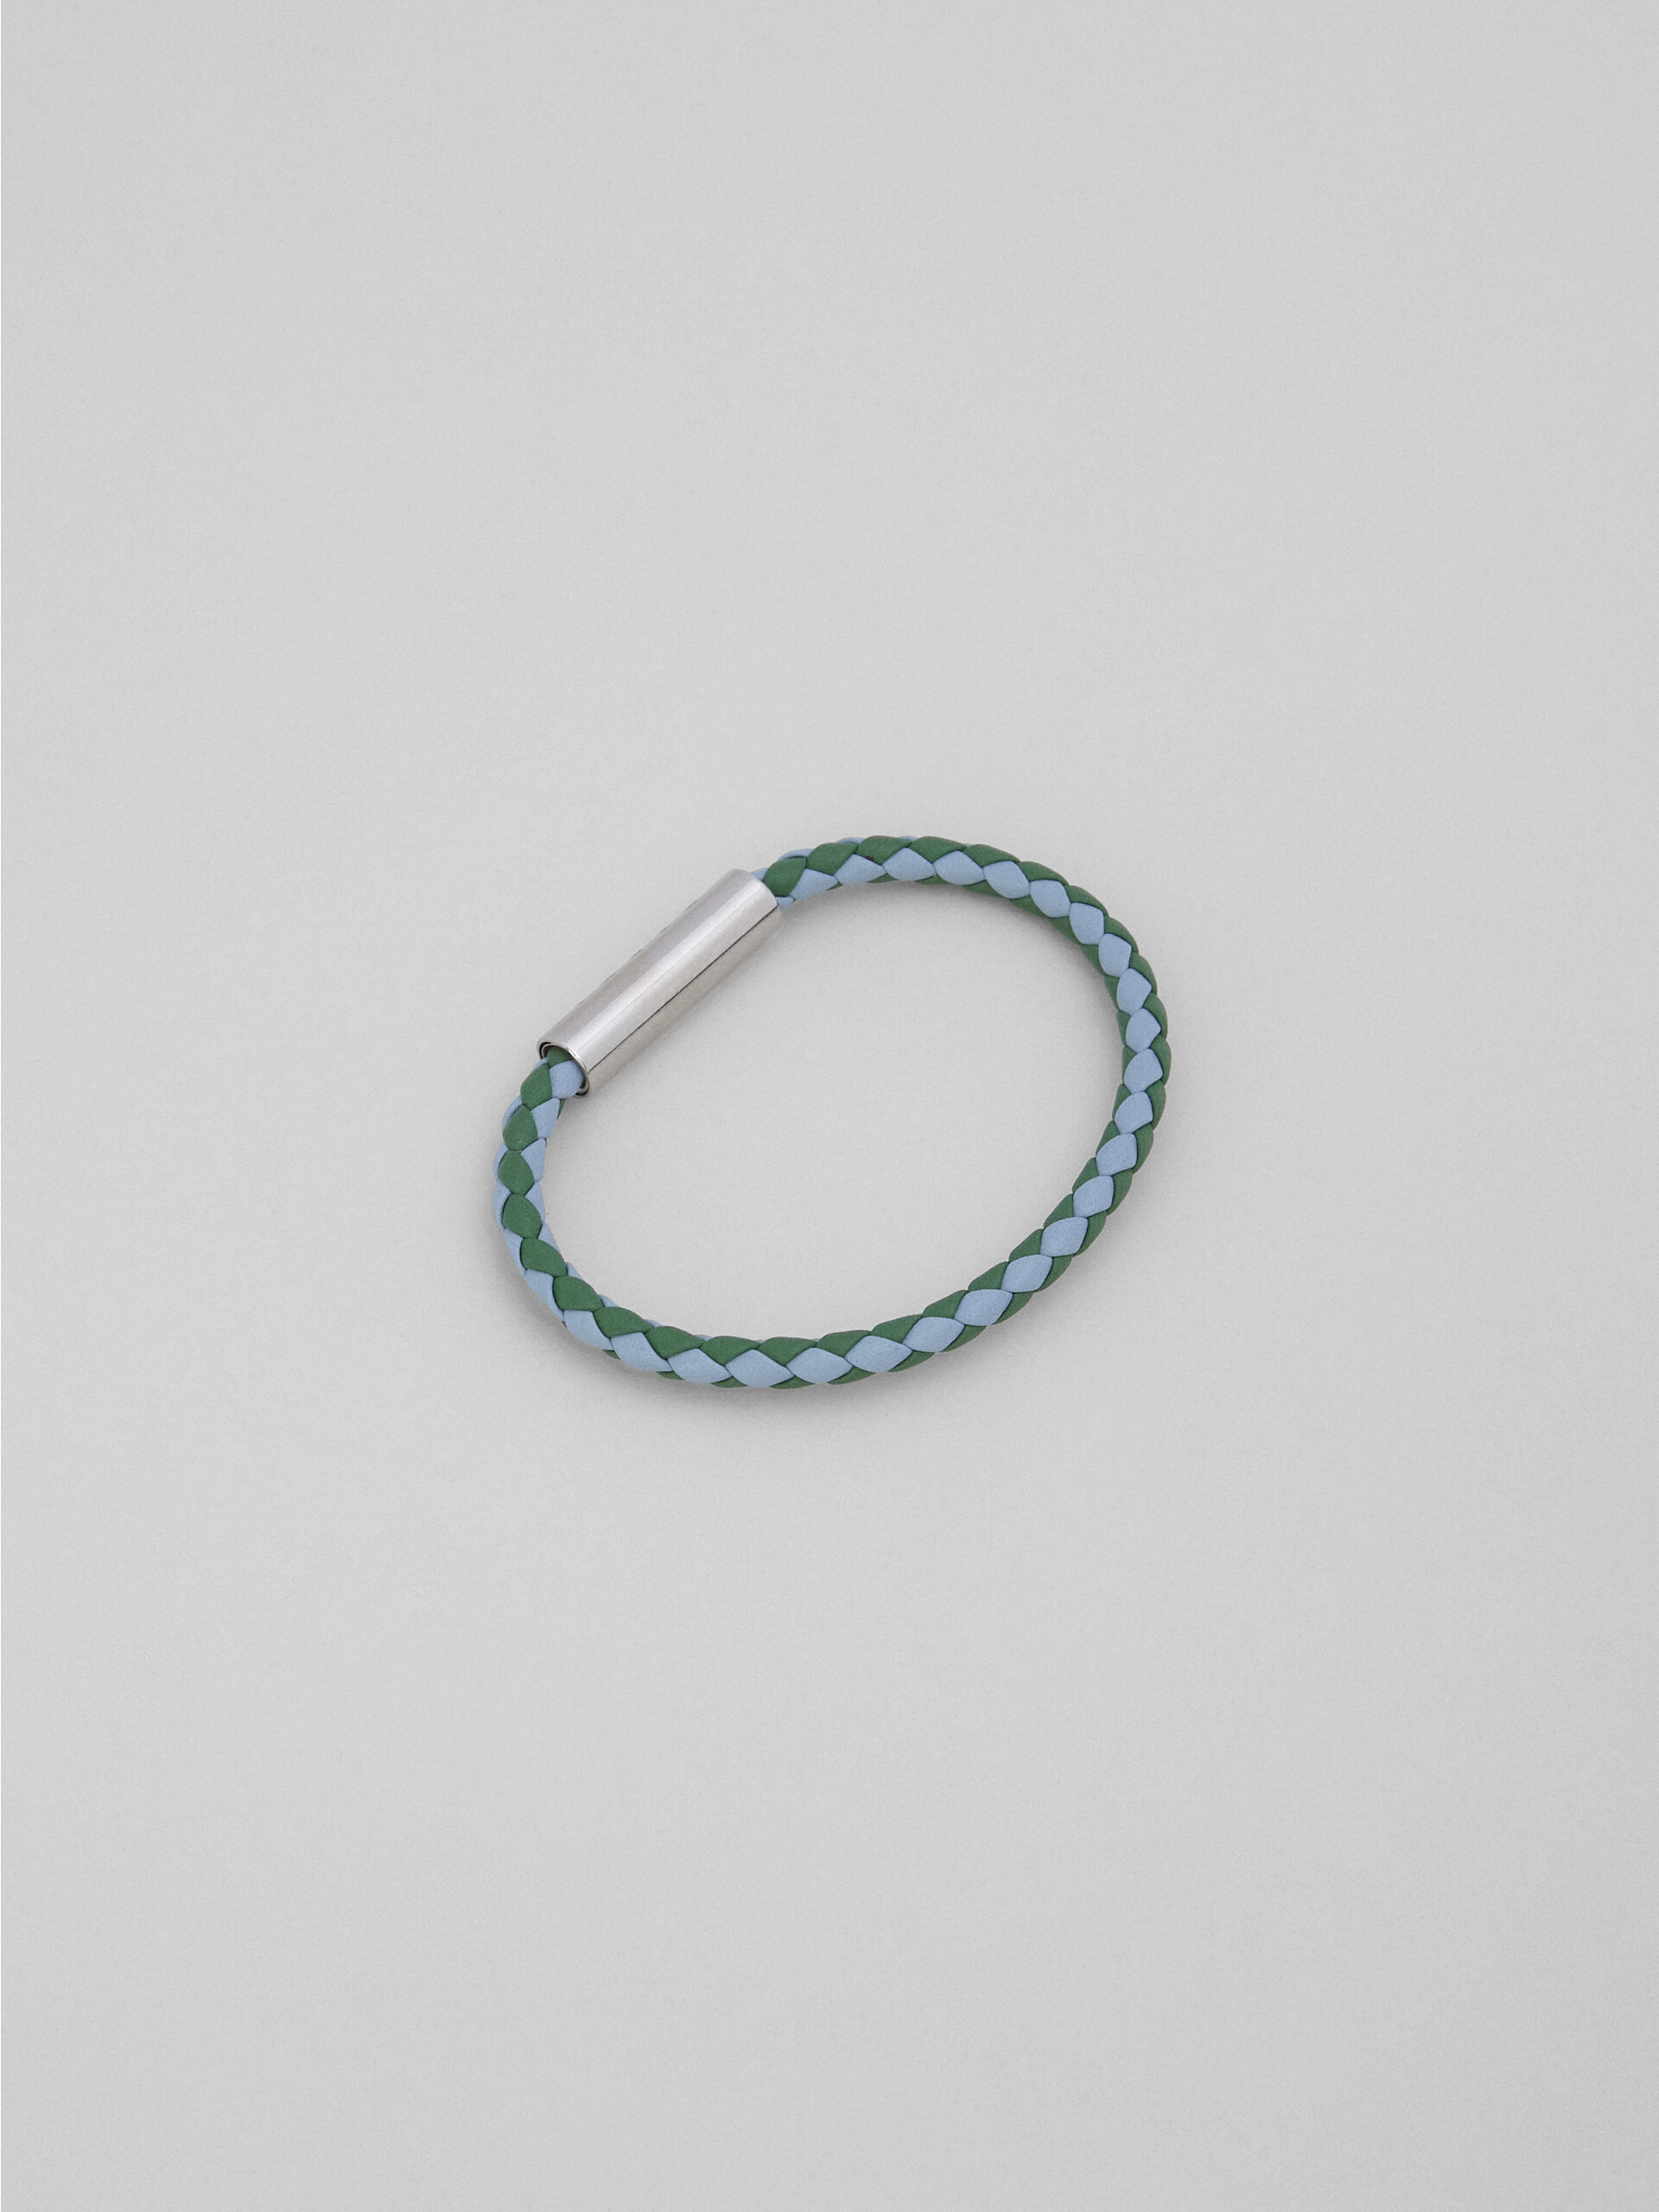 Green and light blue braided leather bracelet - Bracelets - Image 3